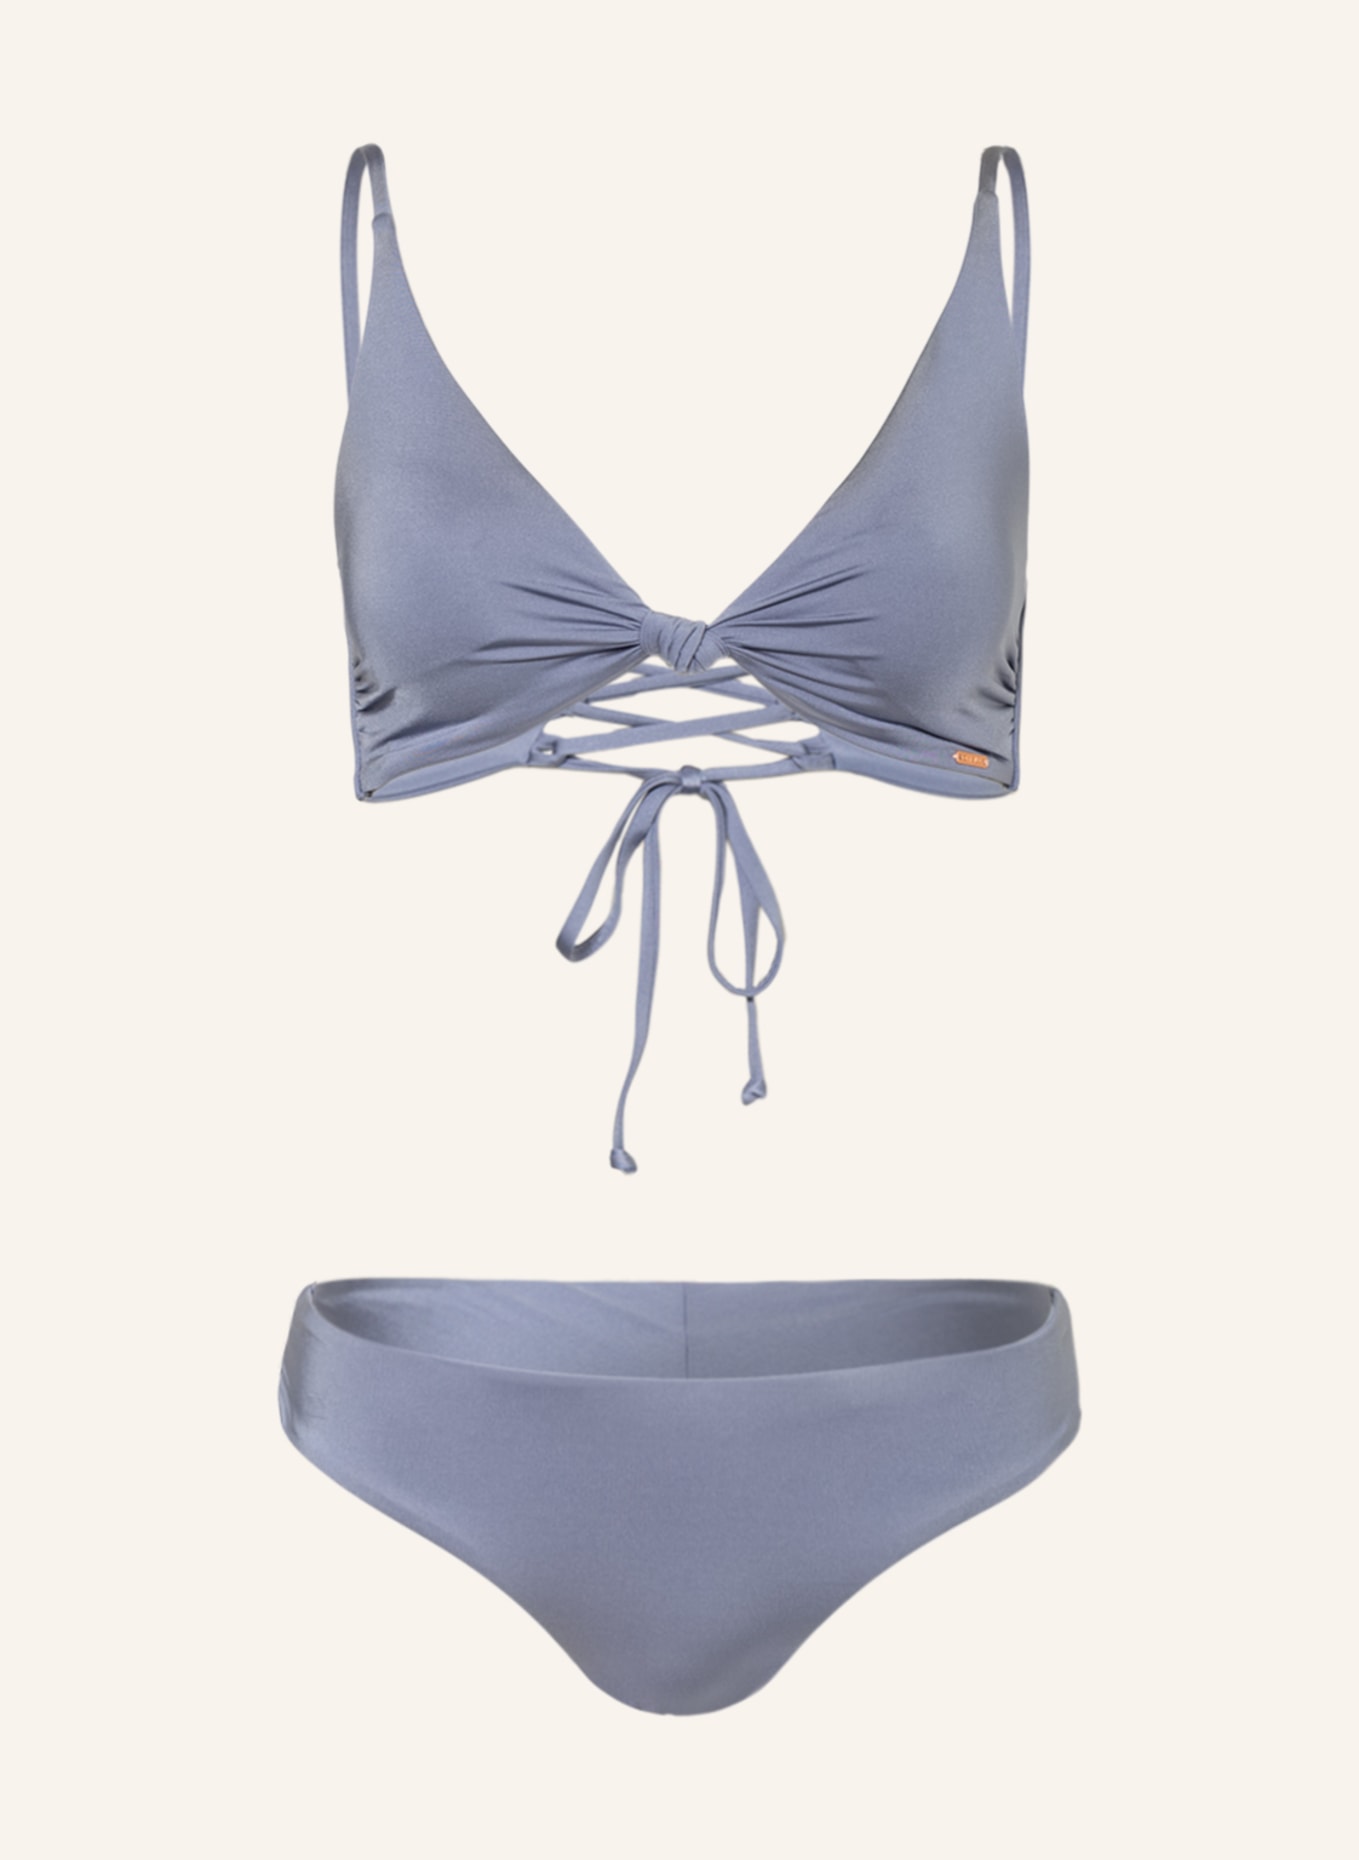 O'NEILL Bralette-Bikini CHARLOTTE MAOI, Farbe: BLAUGRAU (Bild 1)